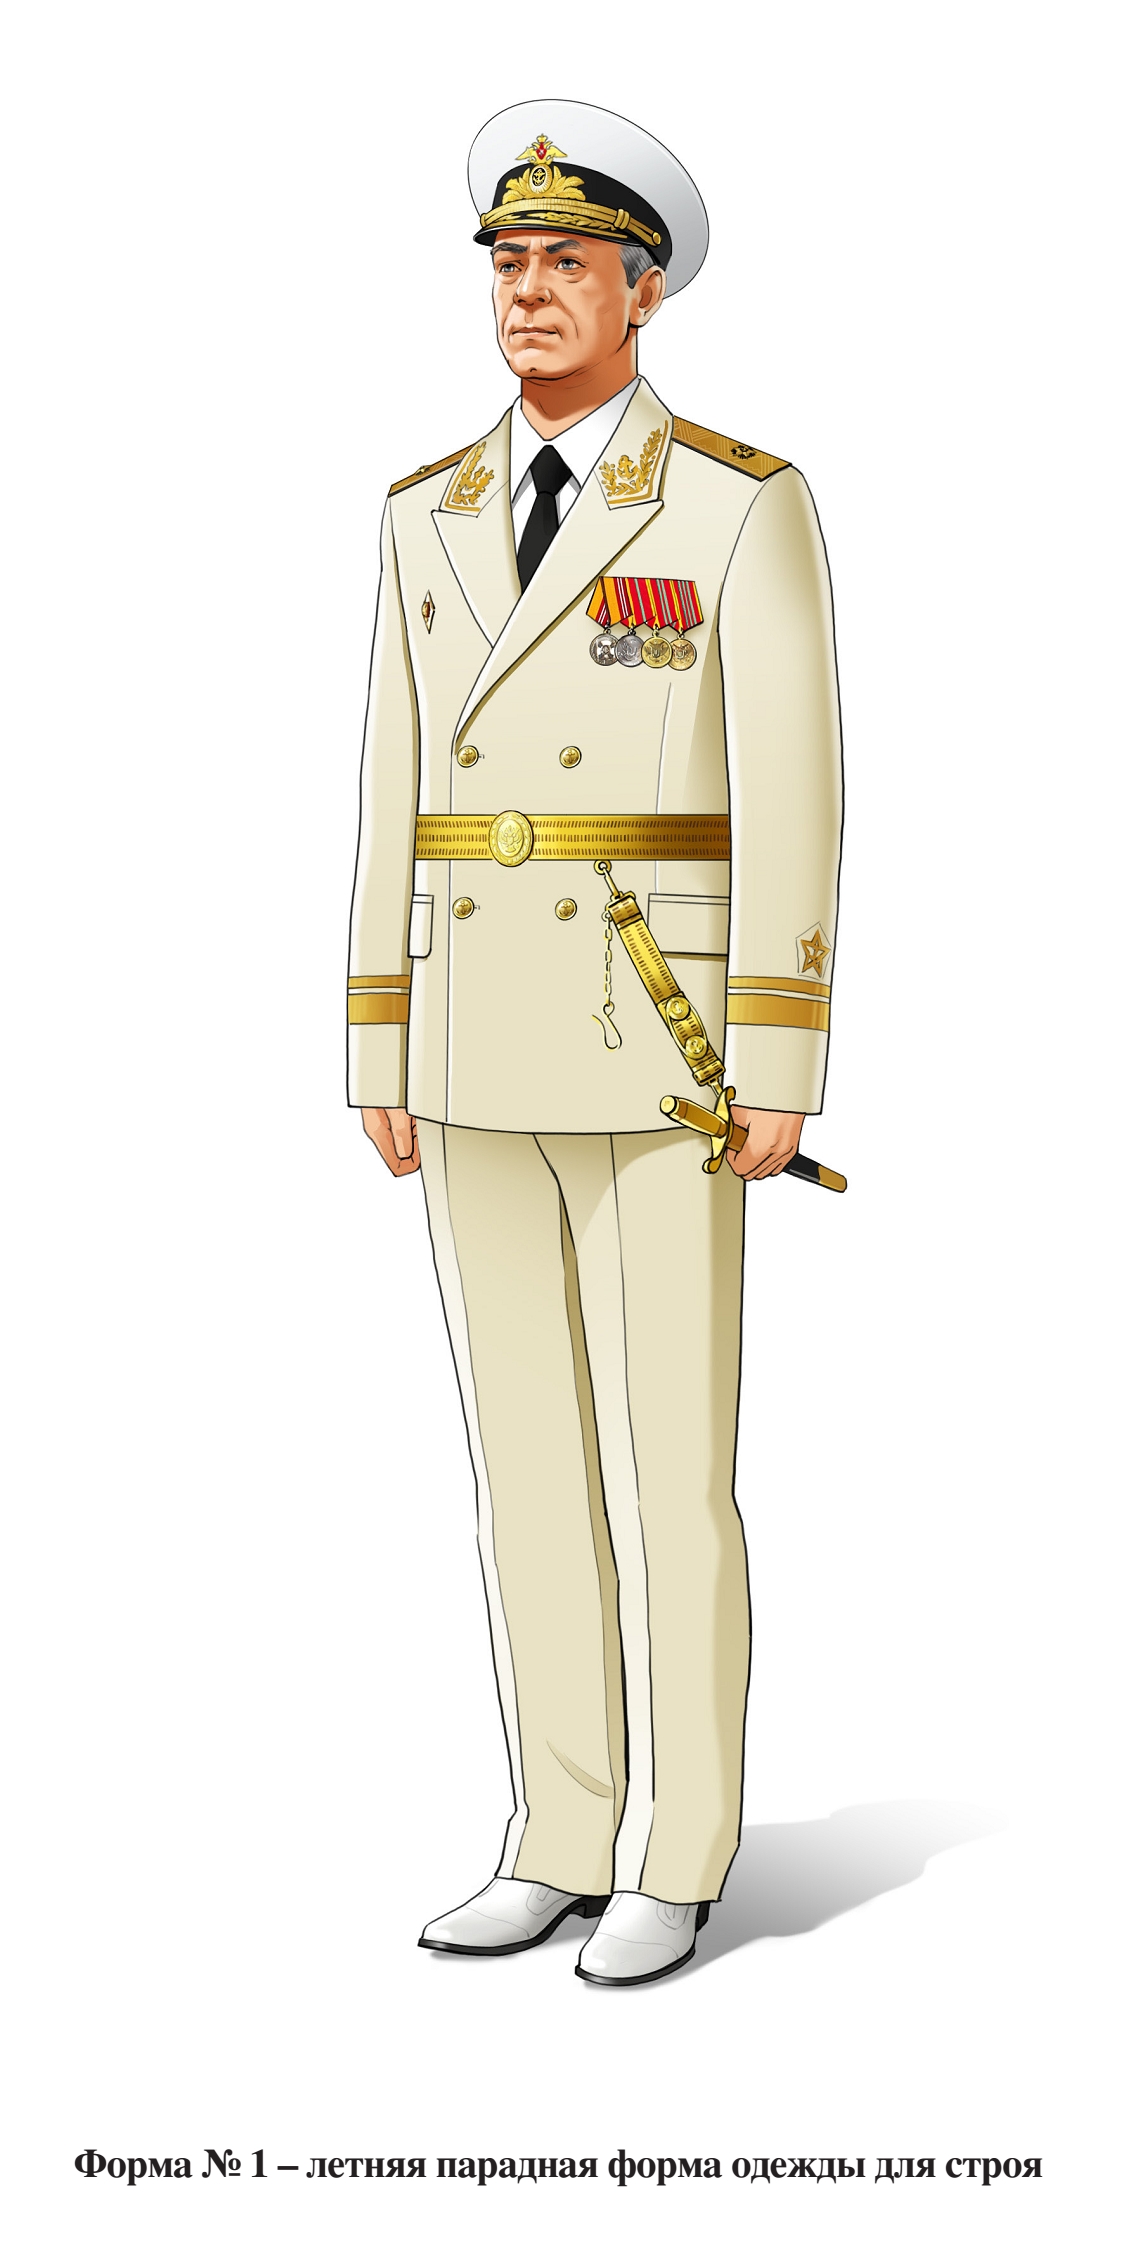 Летняя парадная форма ВМФ для строя, адмирал